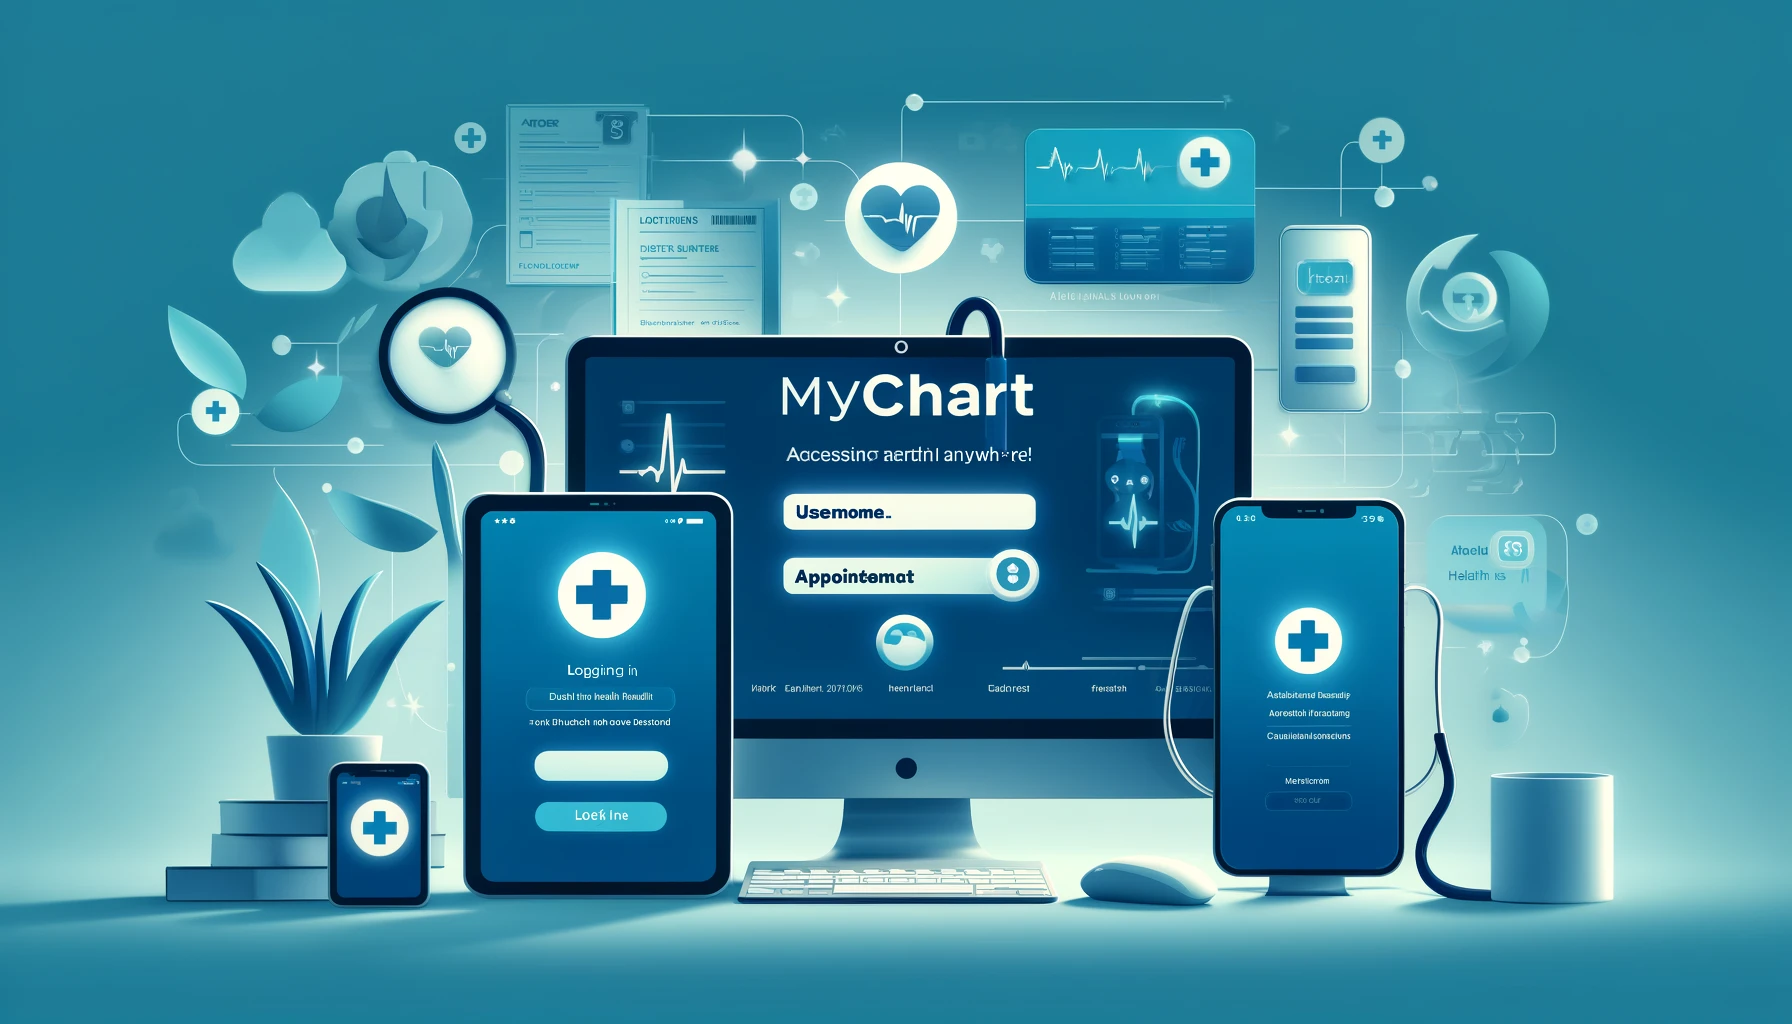 Park Nicollet MyChart Login: Access Your HealthPartners Anywhere